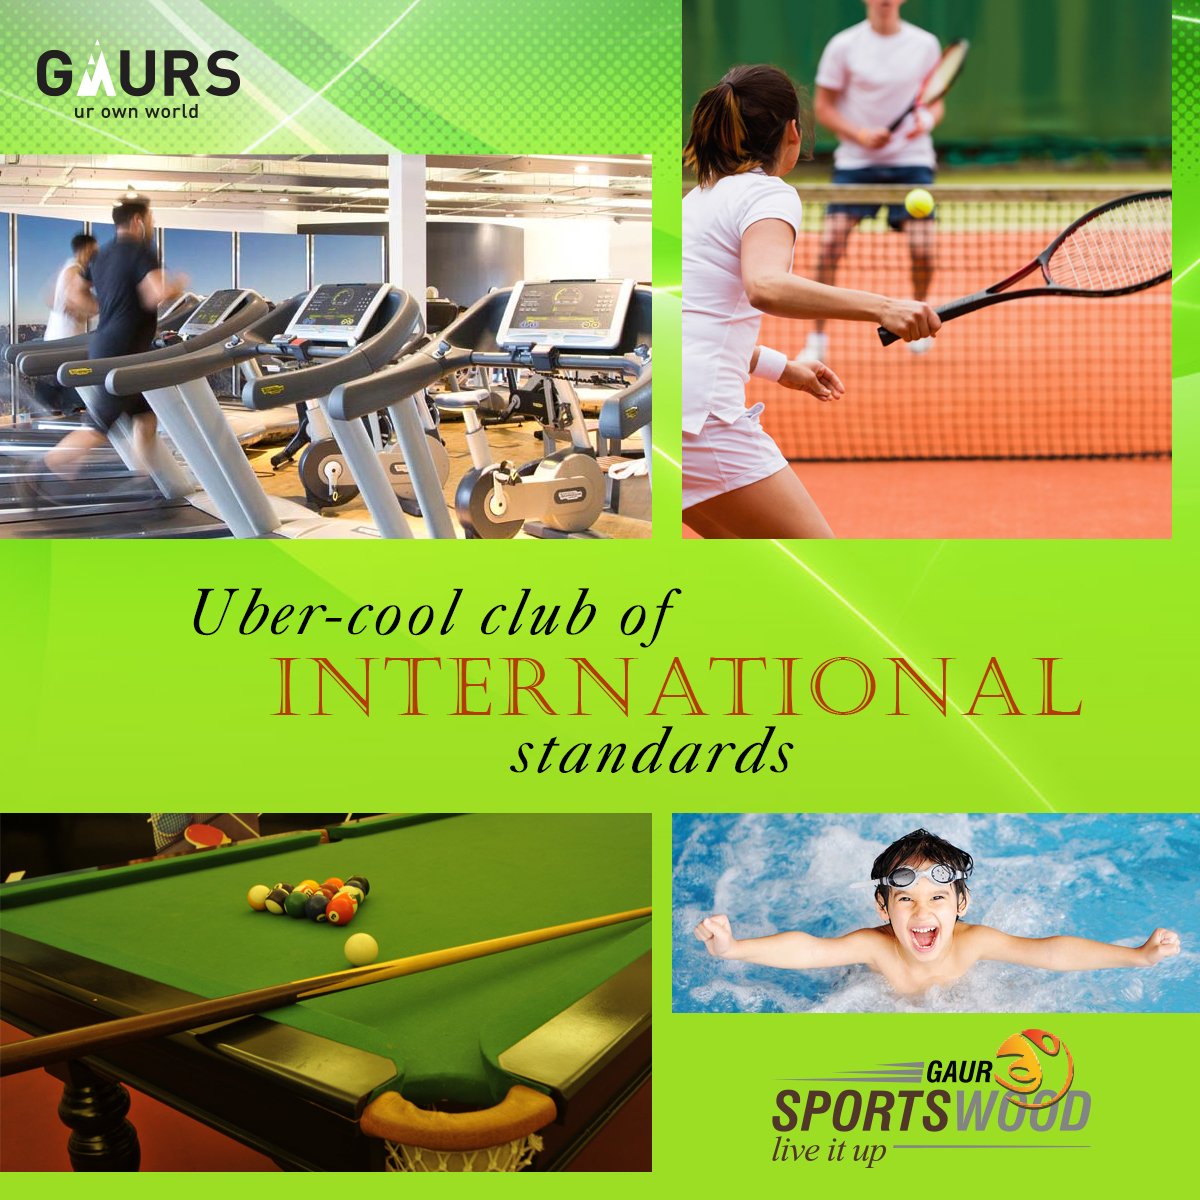 Uber - cool club of International standards at Gaur Sportswood Update